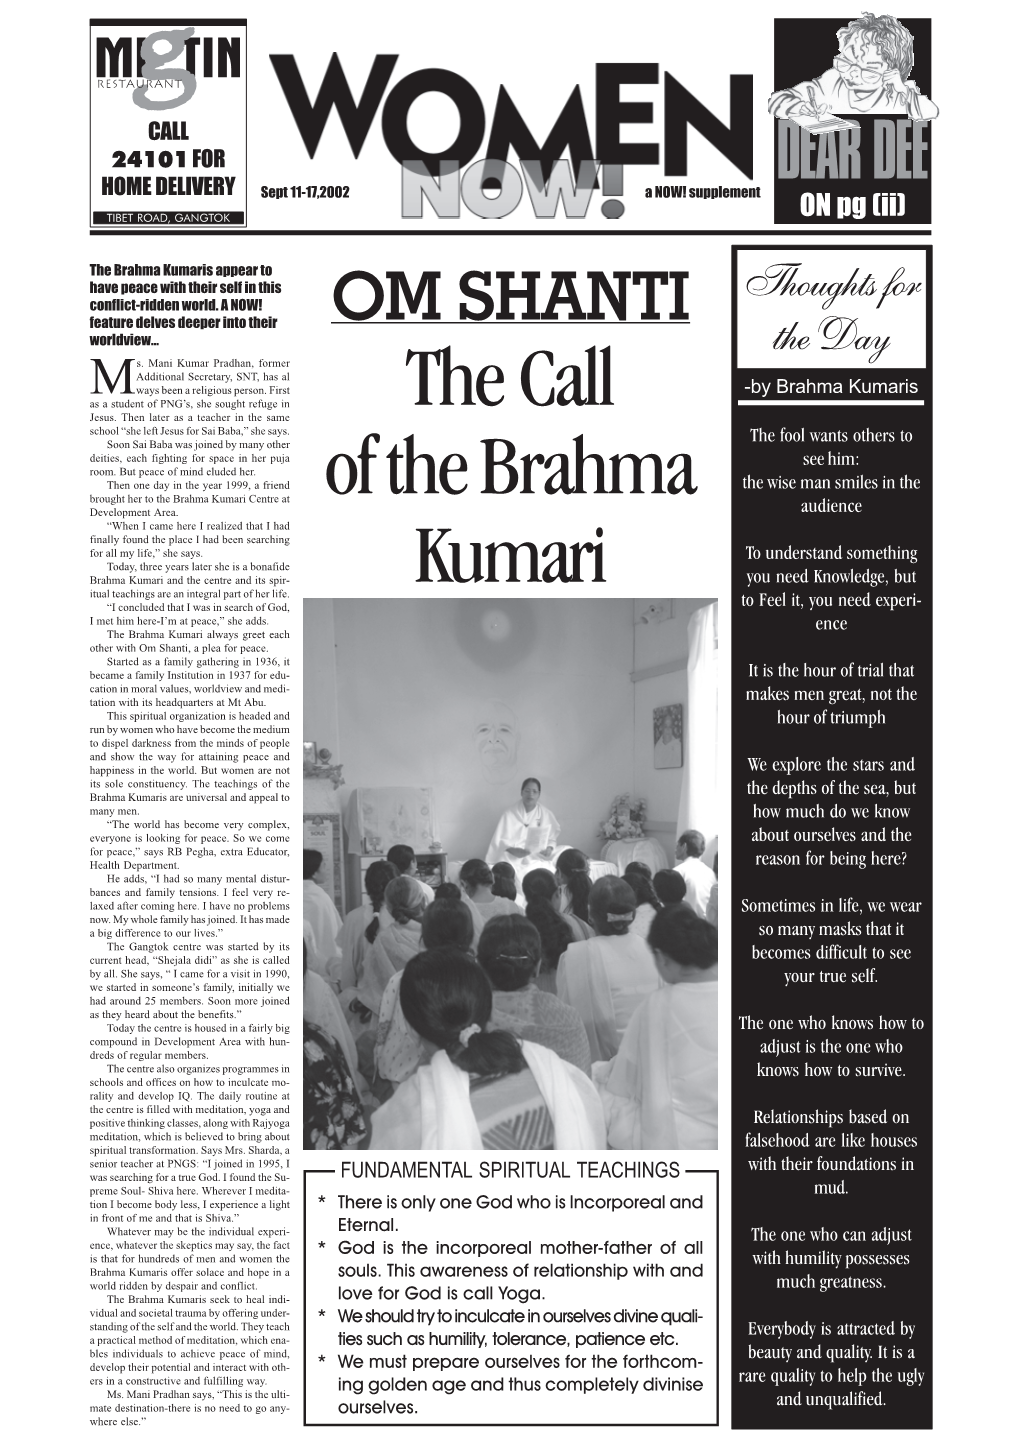 The Call of the Brahma Kumari